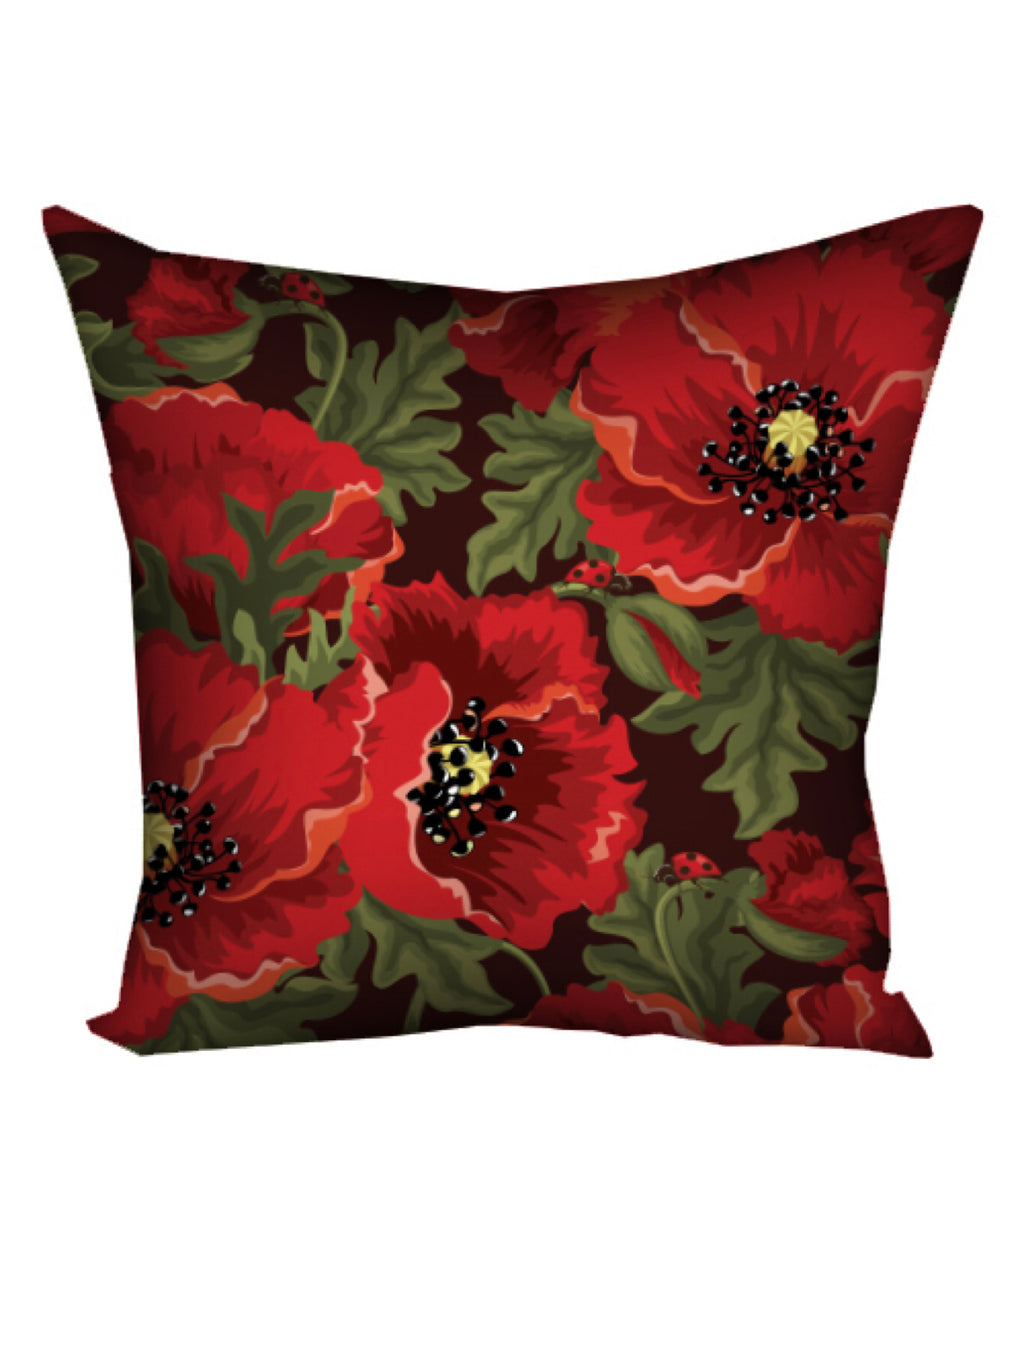 Decorative Pillow “Poppies”